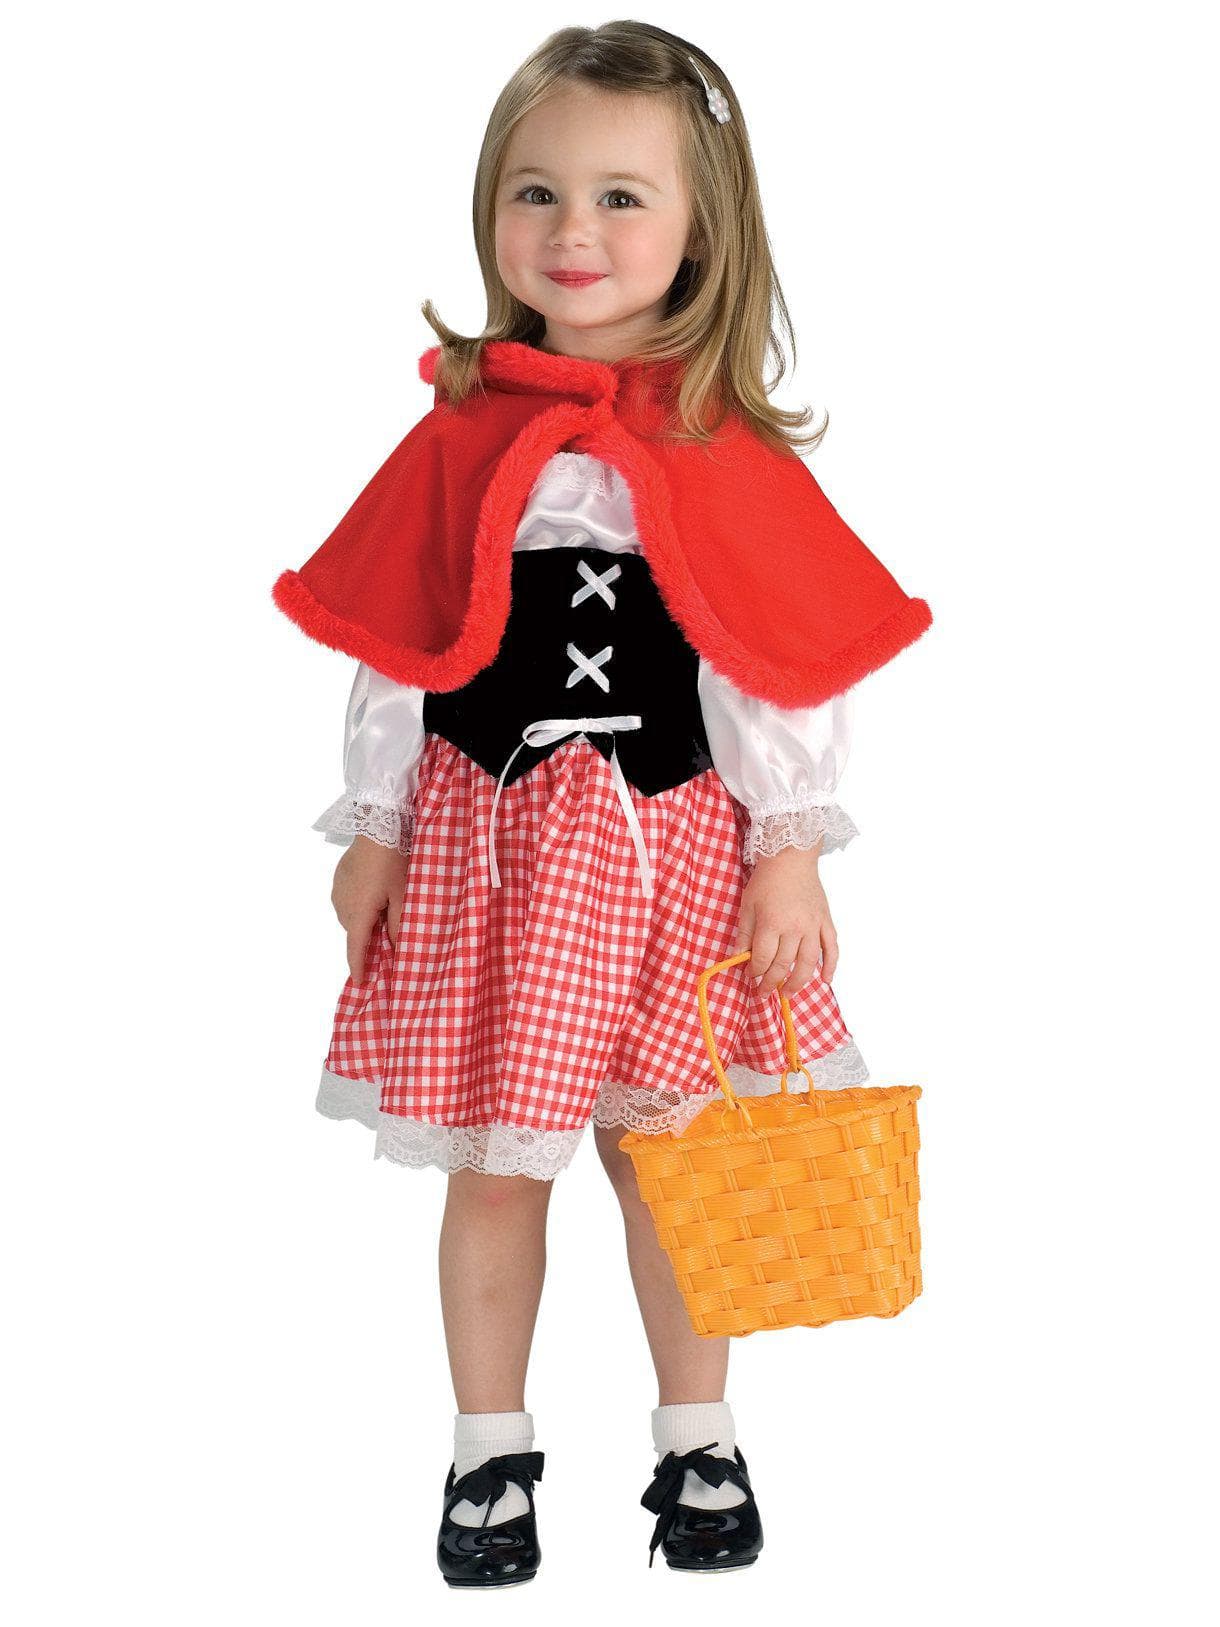 Kids Red Riding Hood Costume - costumes.com